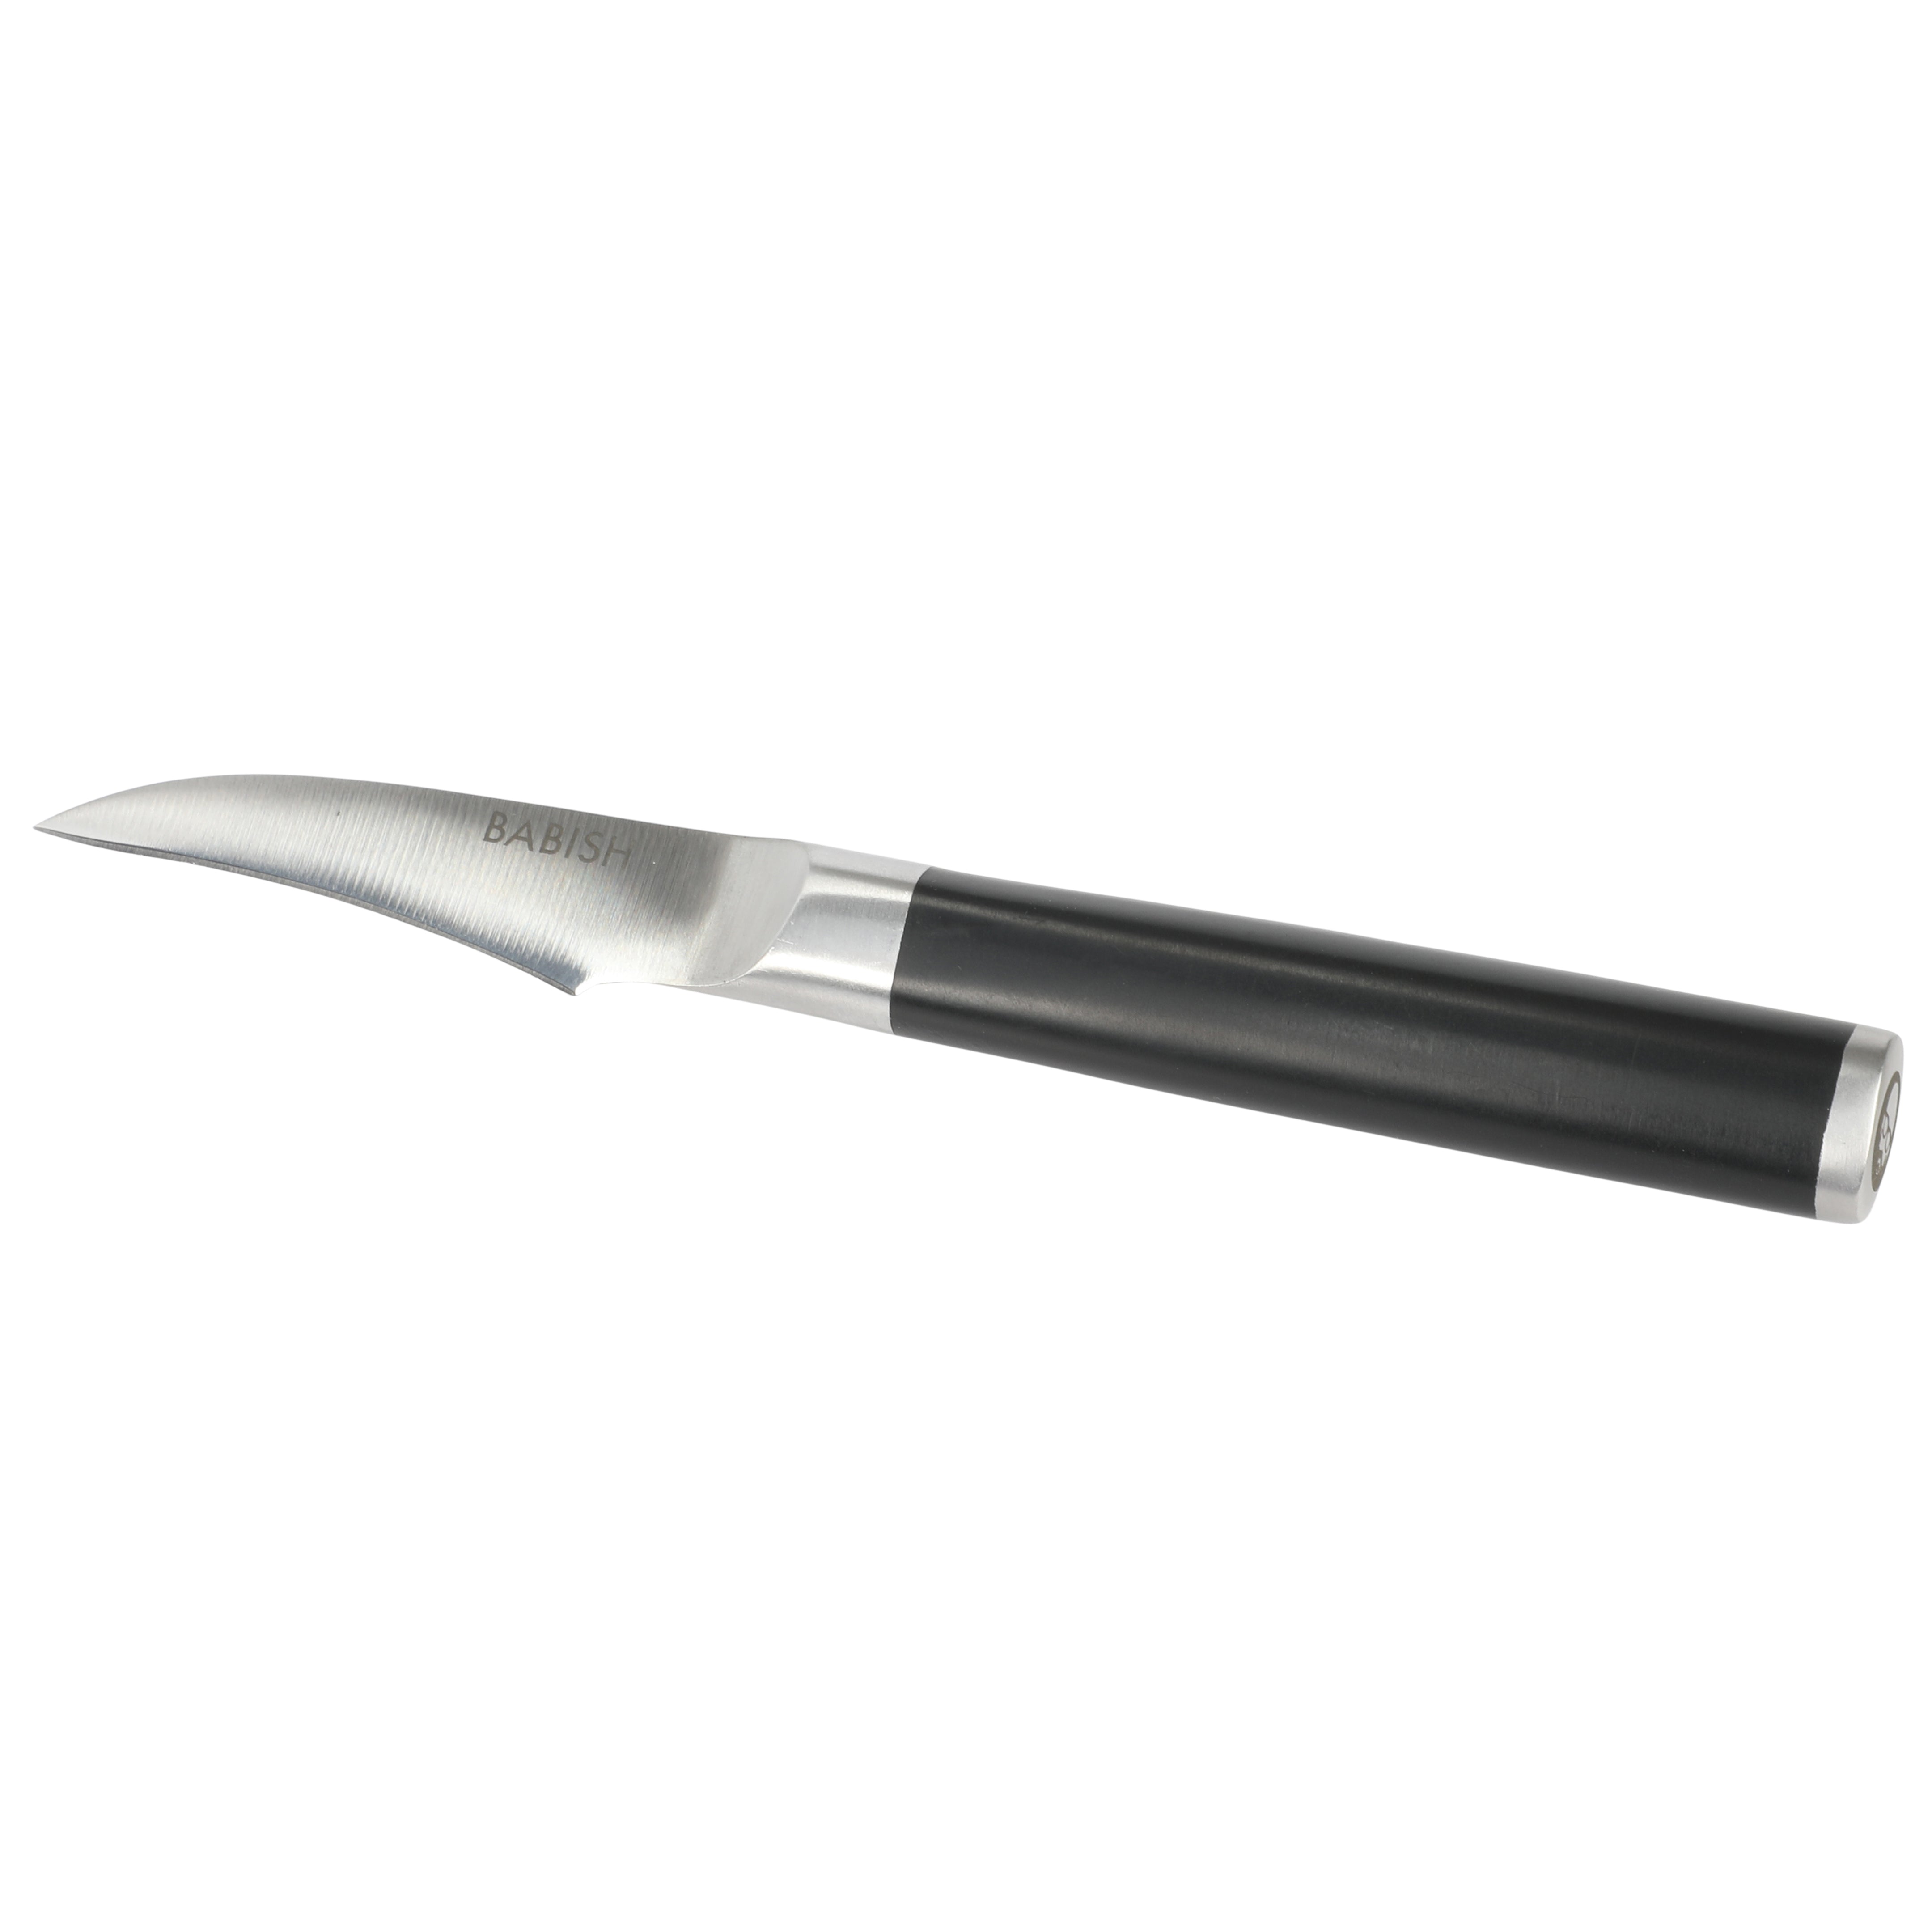 Babish High-Carbon 1.4116 German Steel 2.5" Bird's Beak Knife